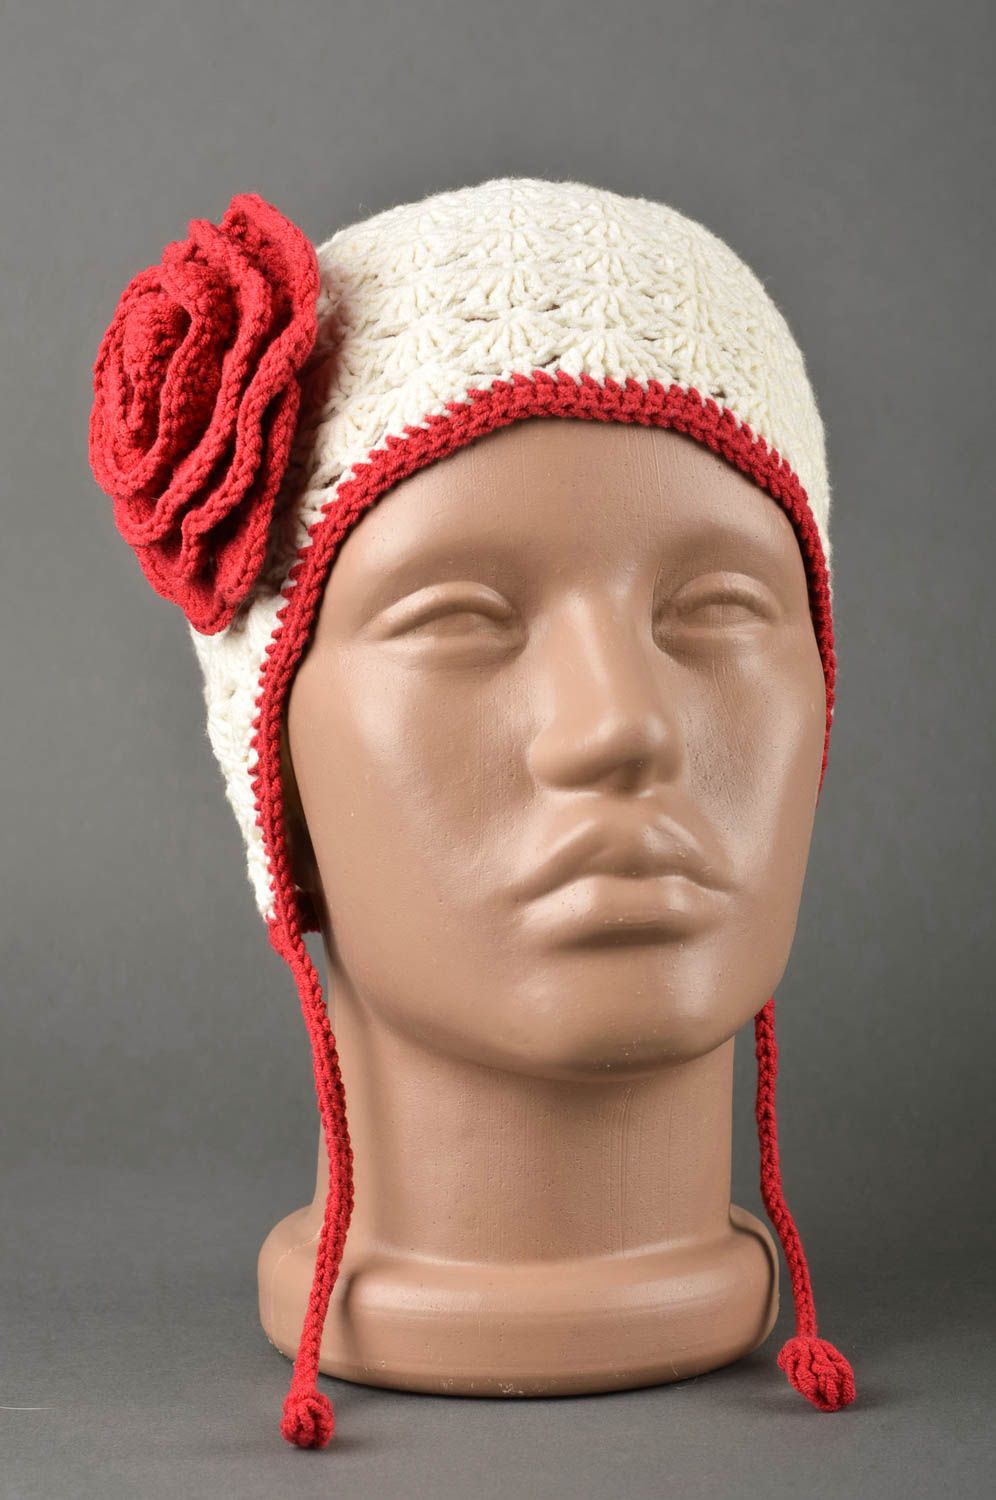 Beautiful hadmade crochet hat baby hat designs crochet ideas gifts for kids photo 1